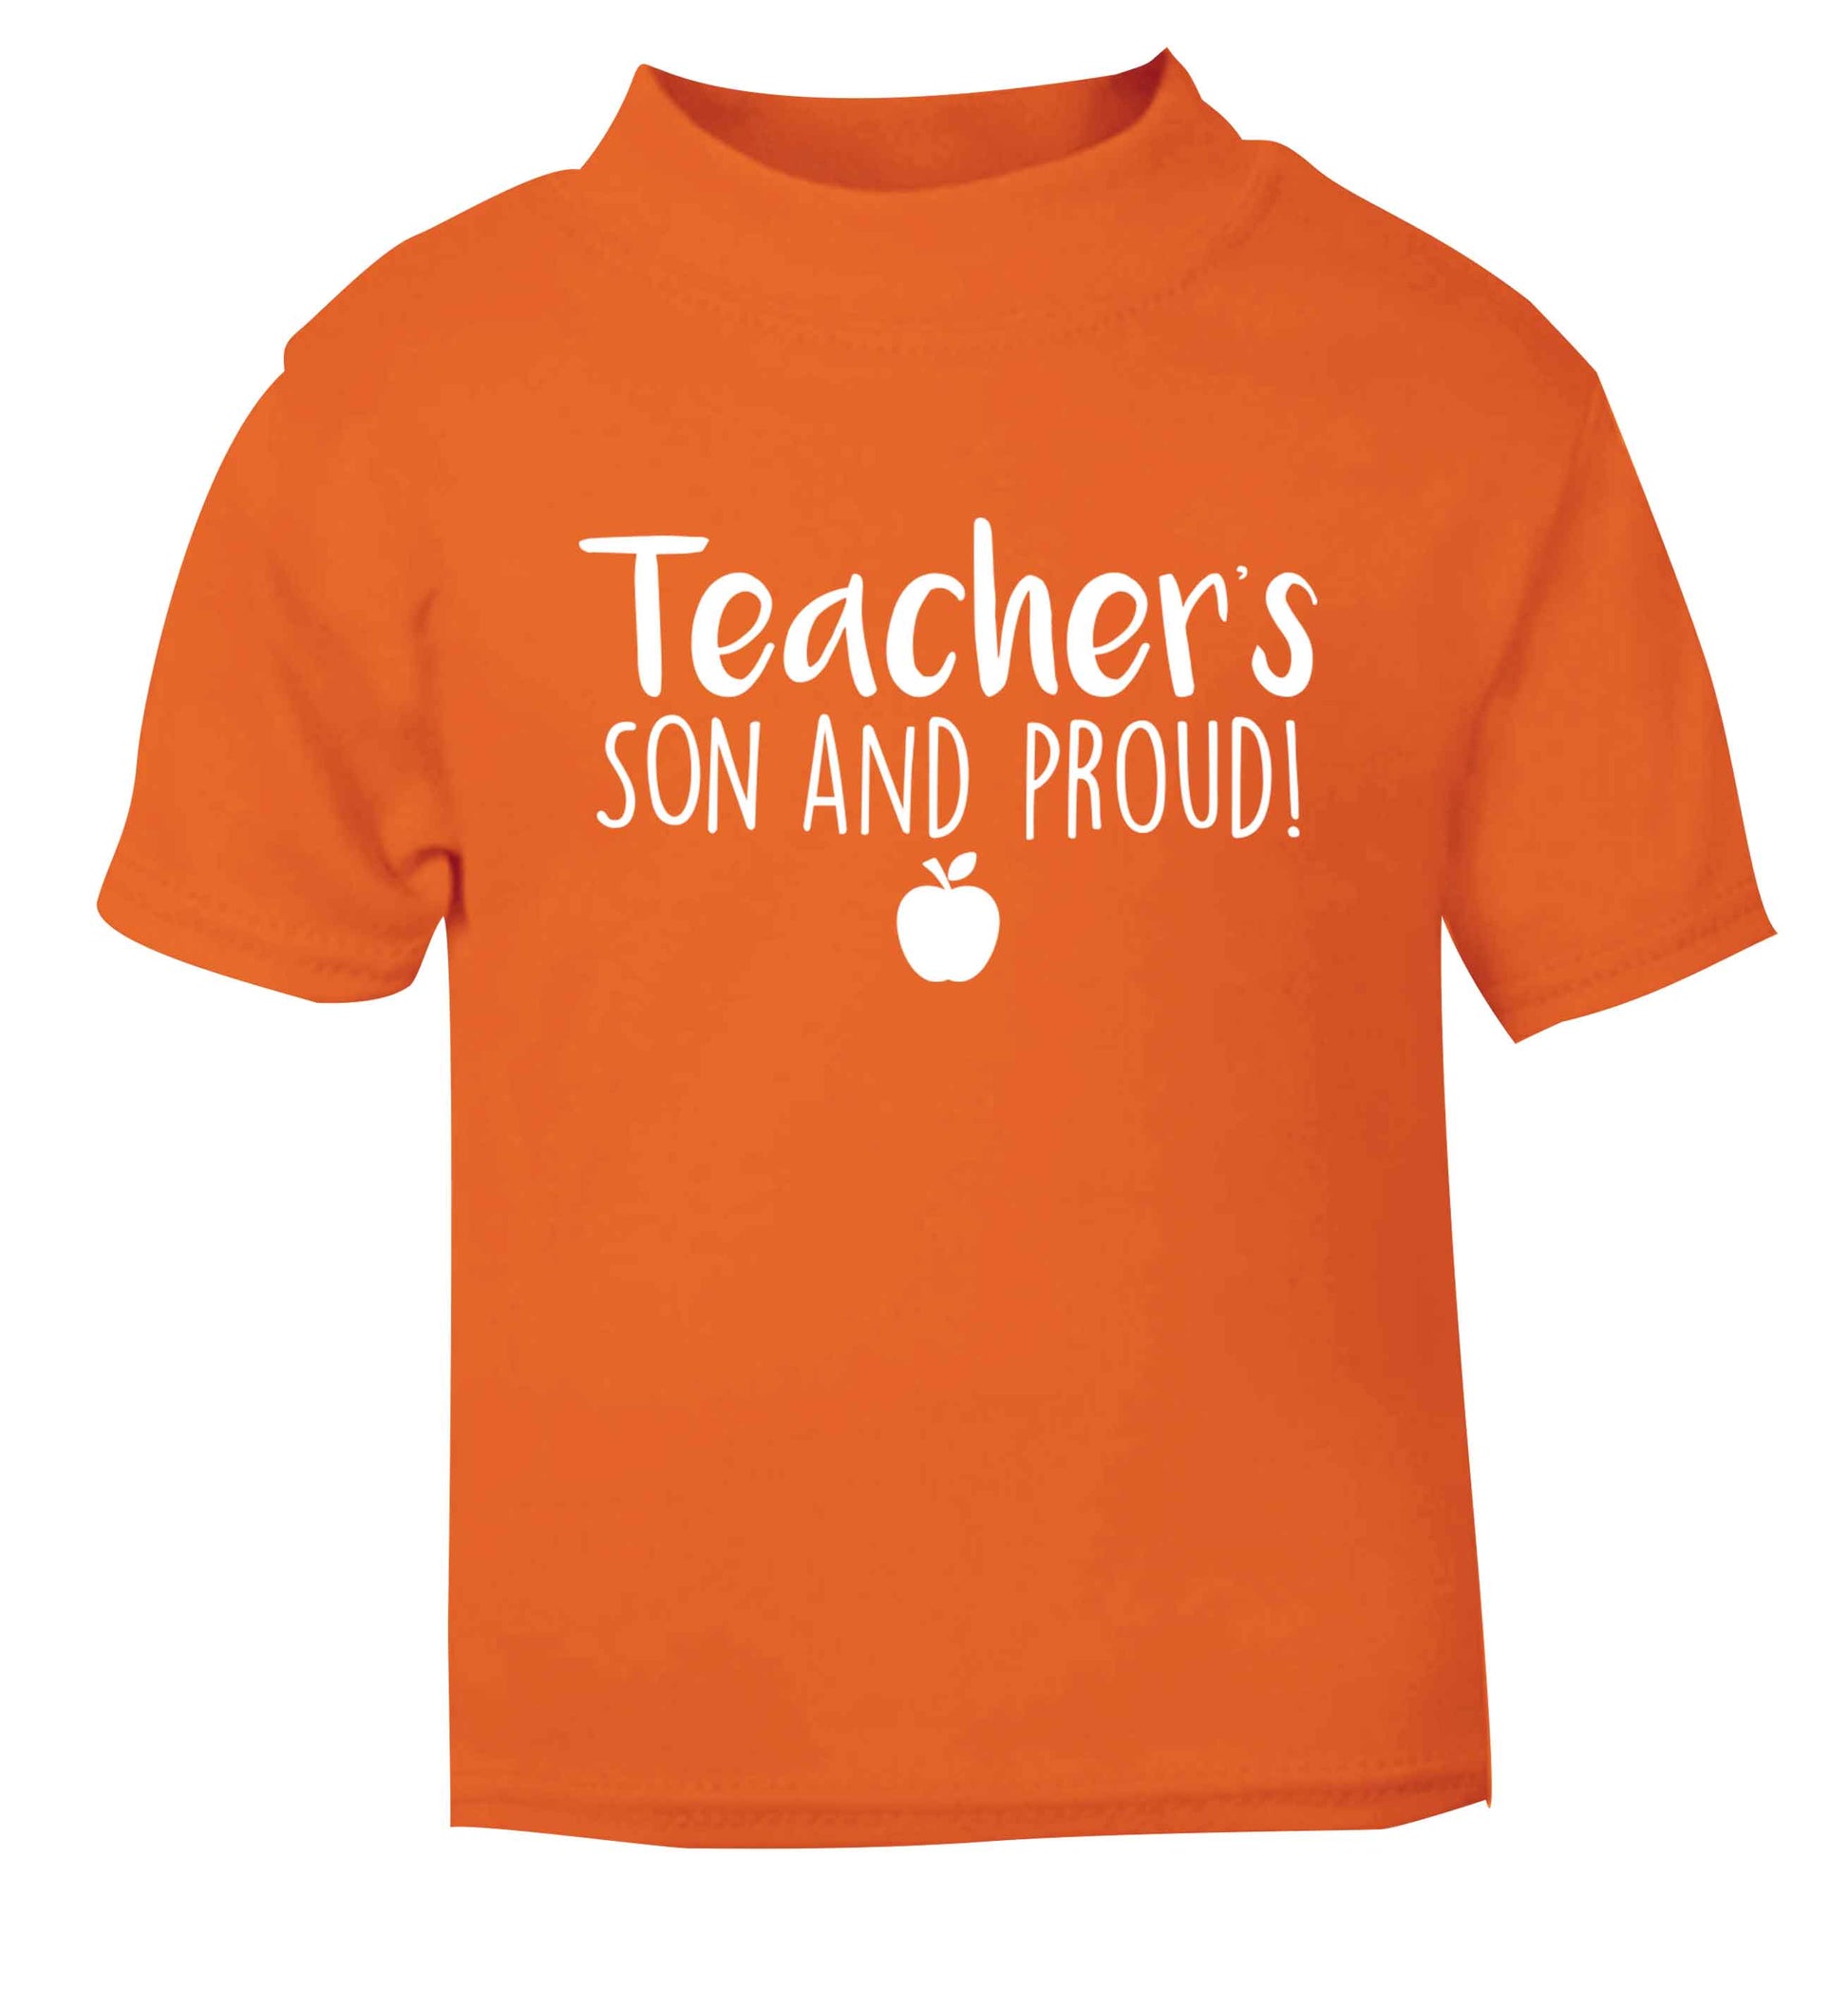 Teachers son and proud orange baby toddler Tshirt 2 Years